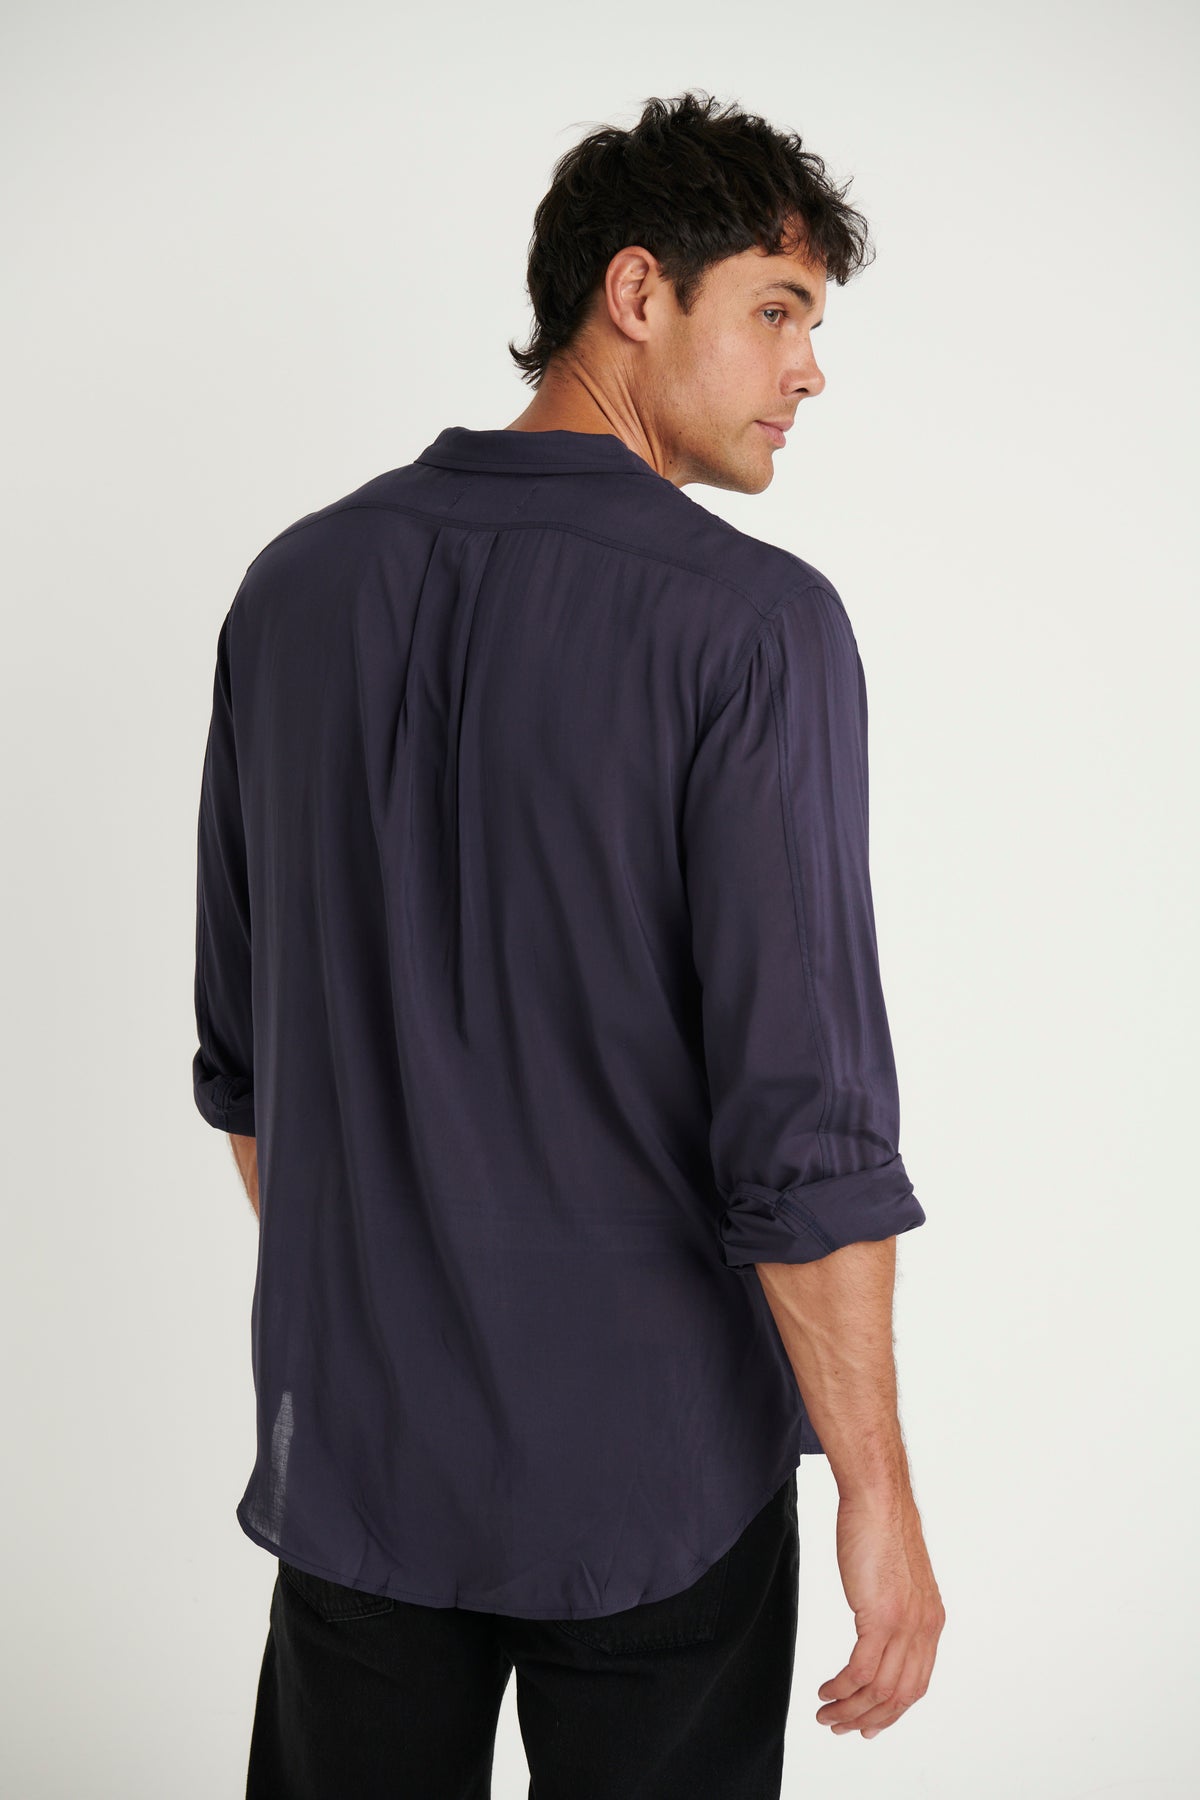 NTH Rayon Long Sleeve Shirt Dark Navy - FINAL SALE